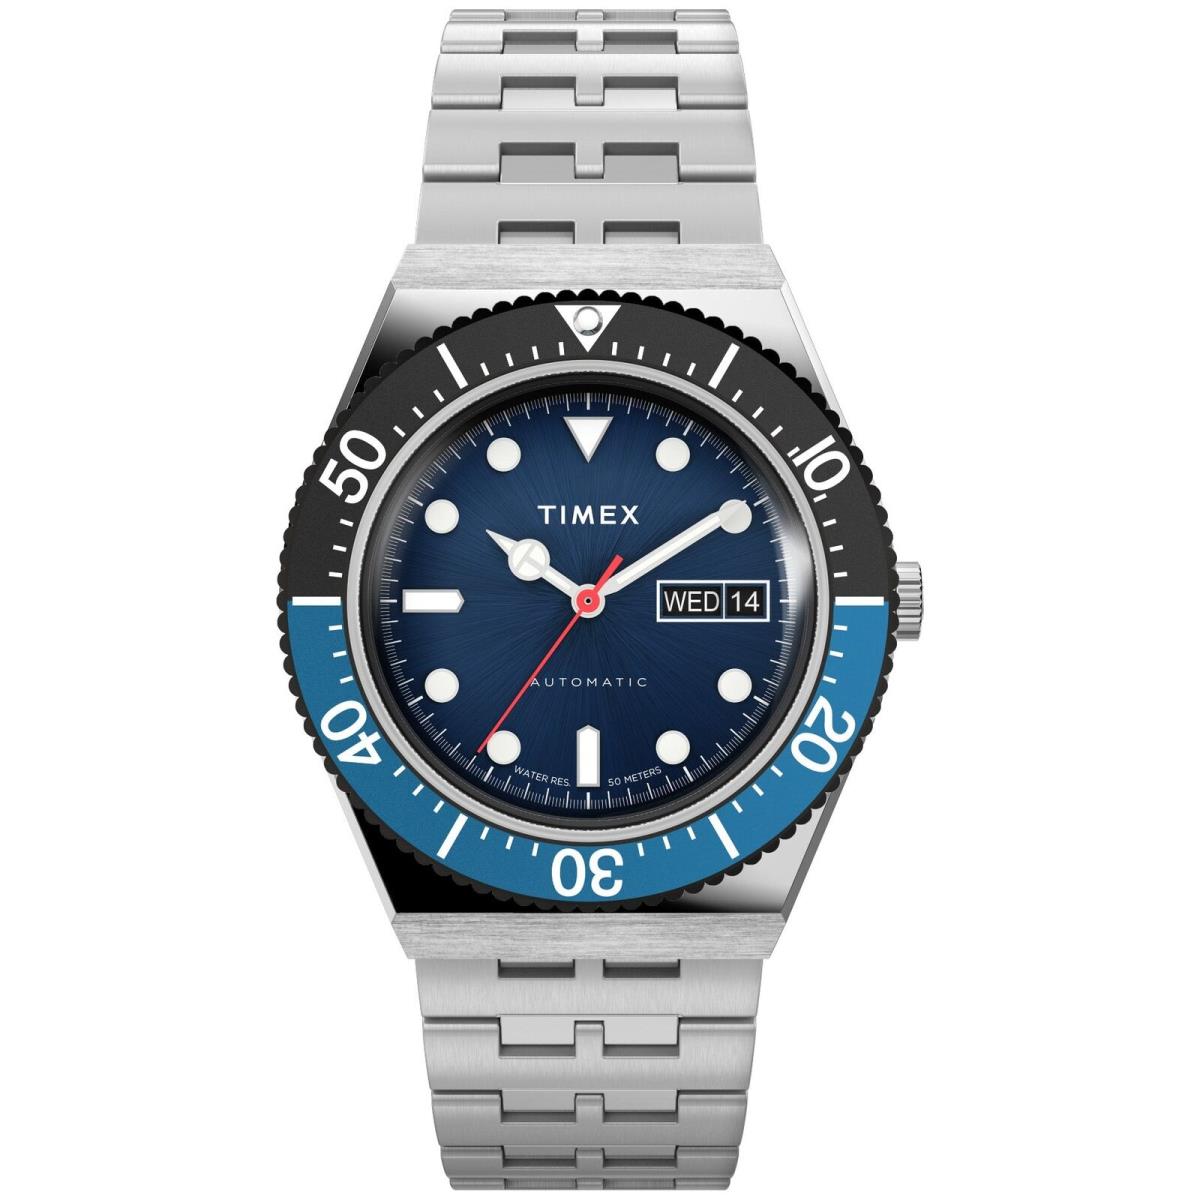 Timex M79 Automatic 40mm Black Blue Watch